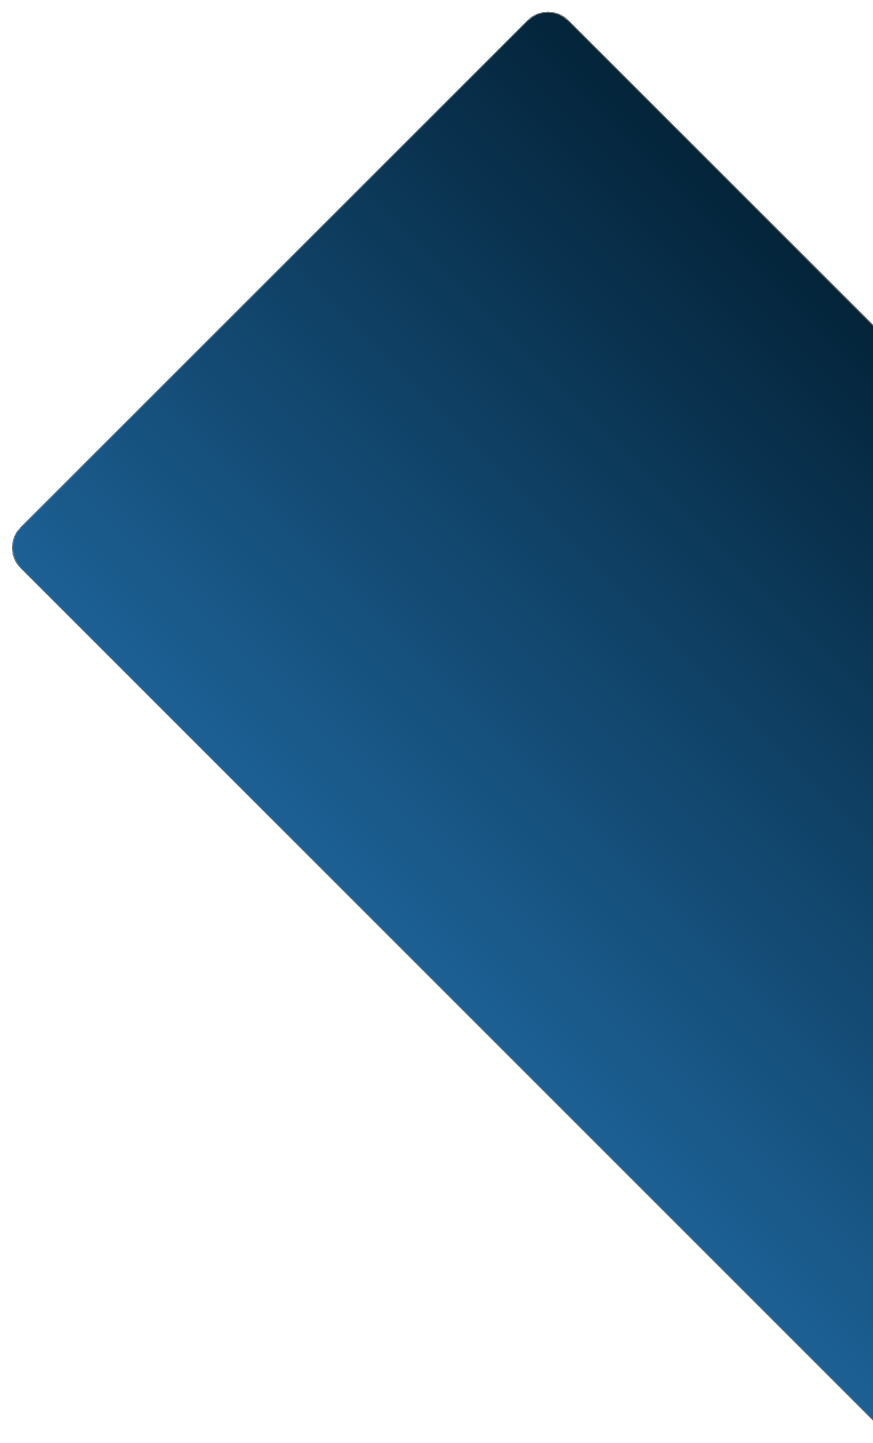  Blue Gradient Background image